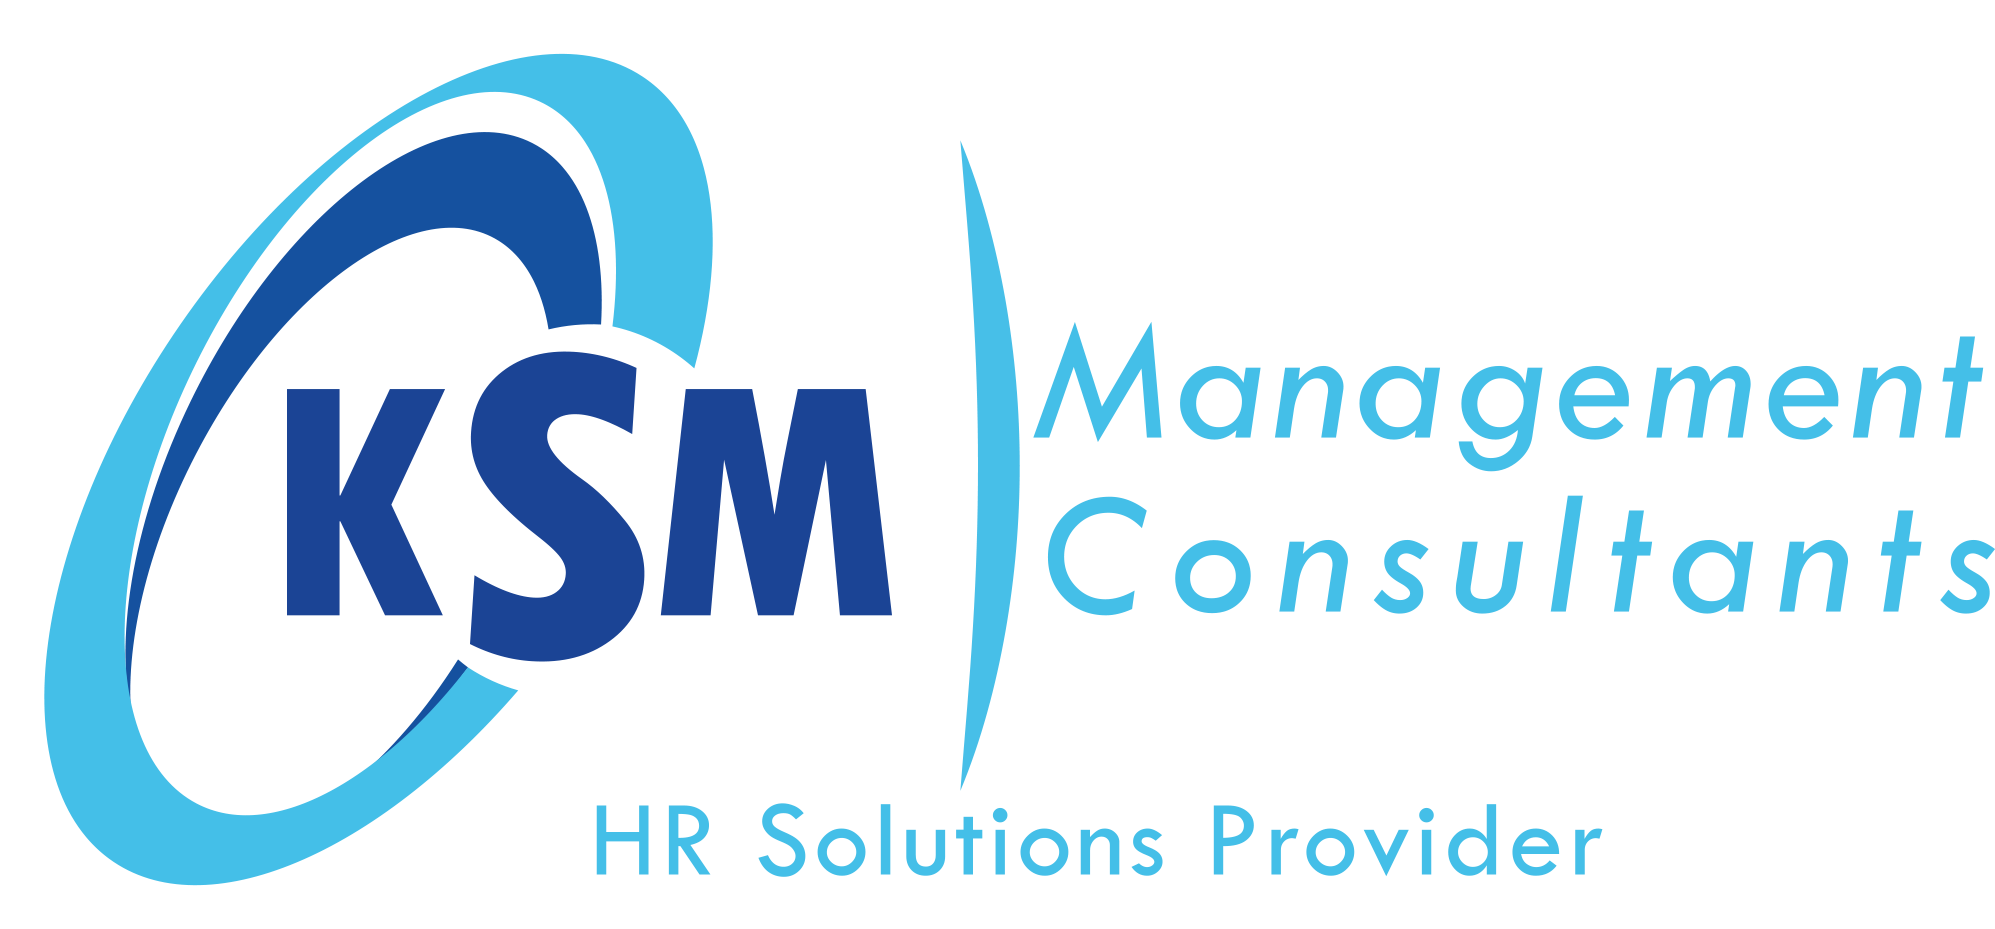 KSM Management Consultants